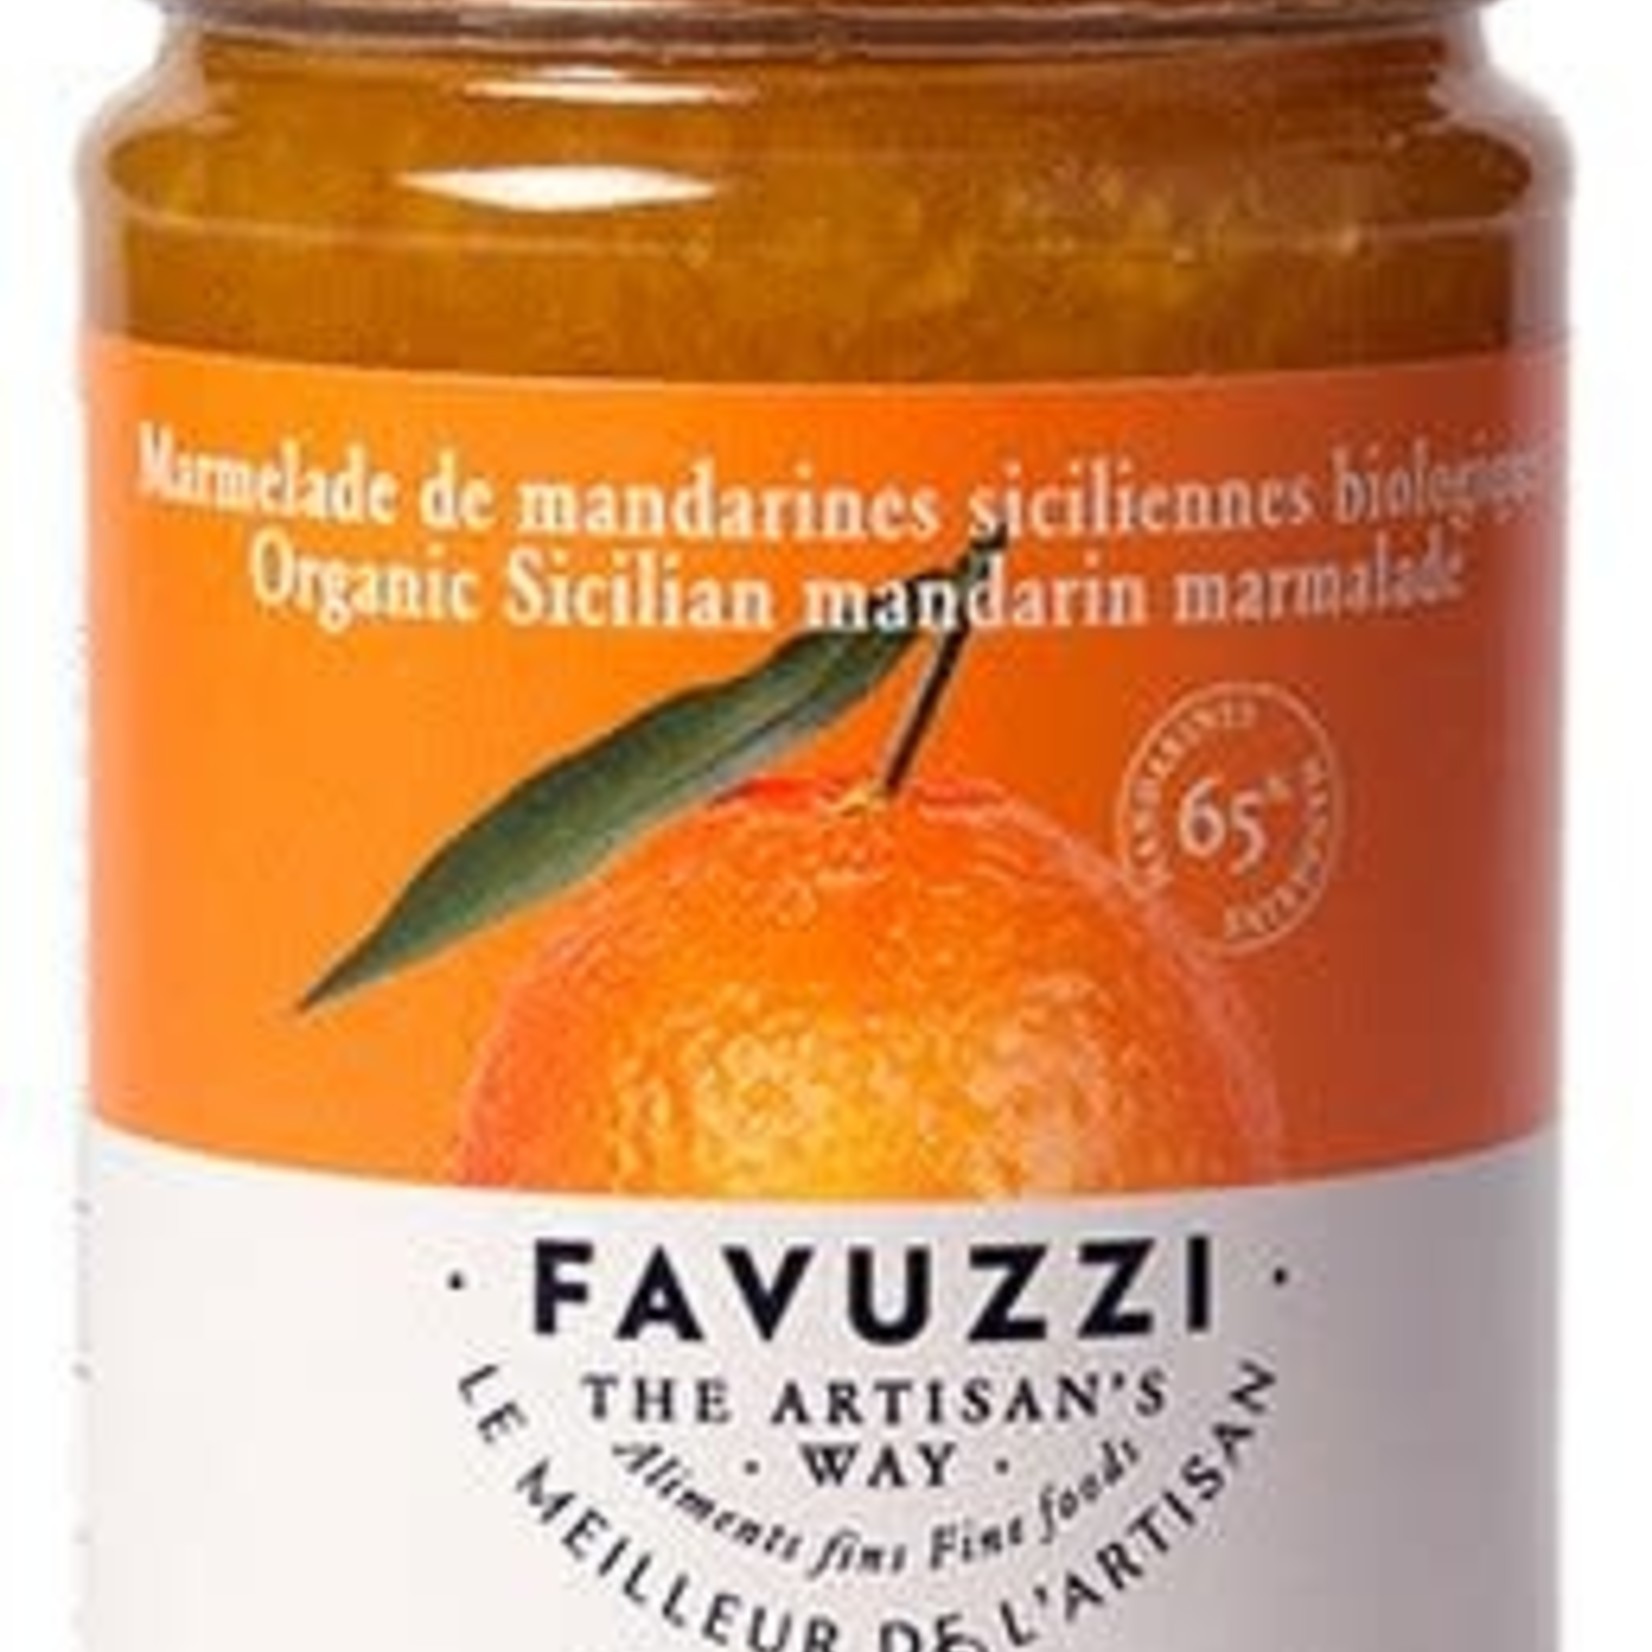 Favuzzi Marmelade mandarines siciliennes biologiques